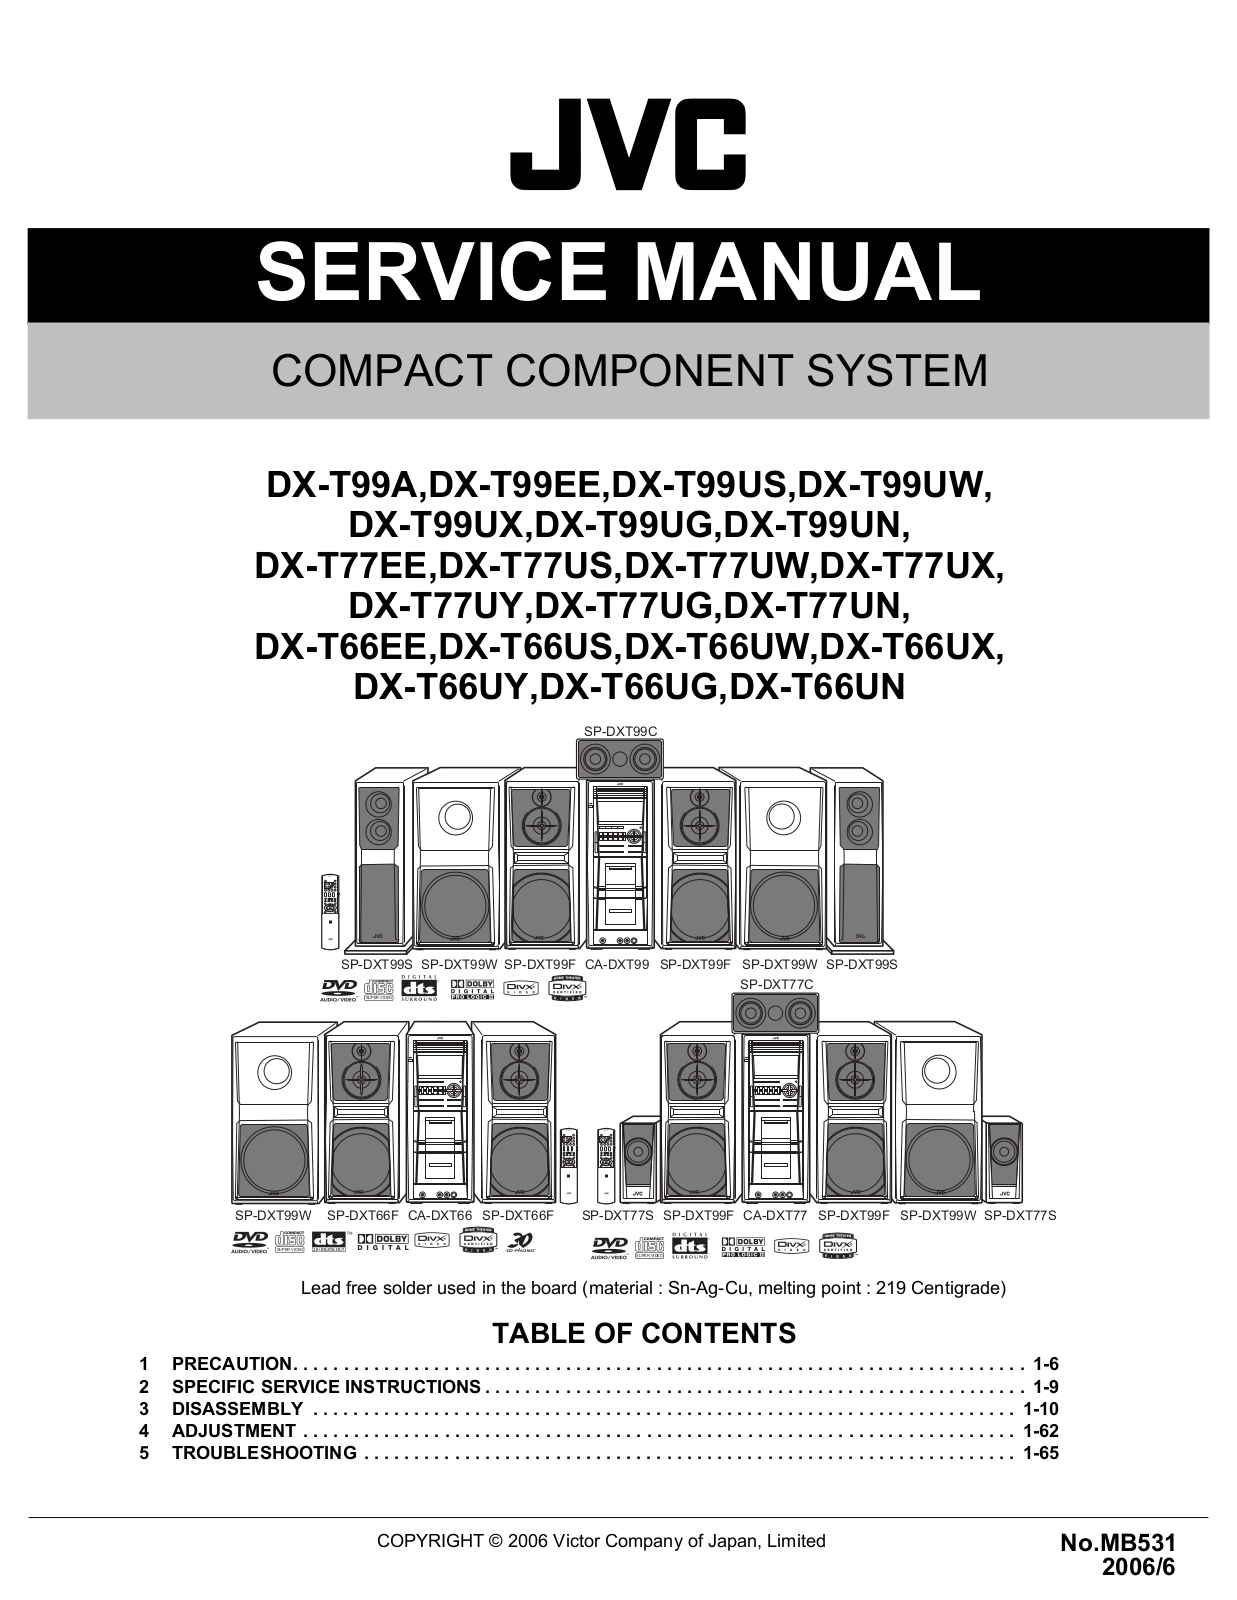 JVC DX-T99A, DX-T99EE, DX-T99US, DX-T99UW, DX-T99UX Service Manual